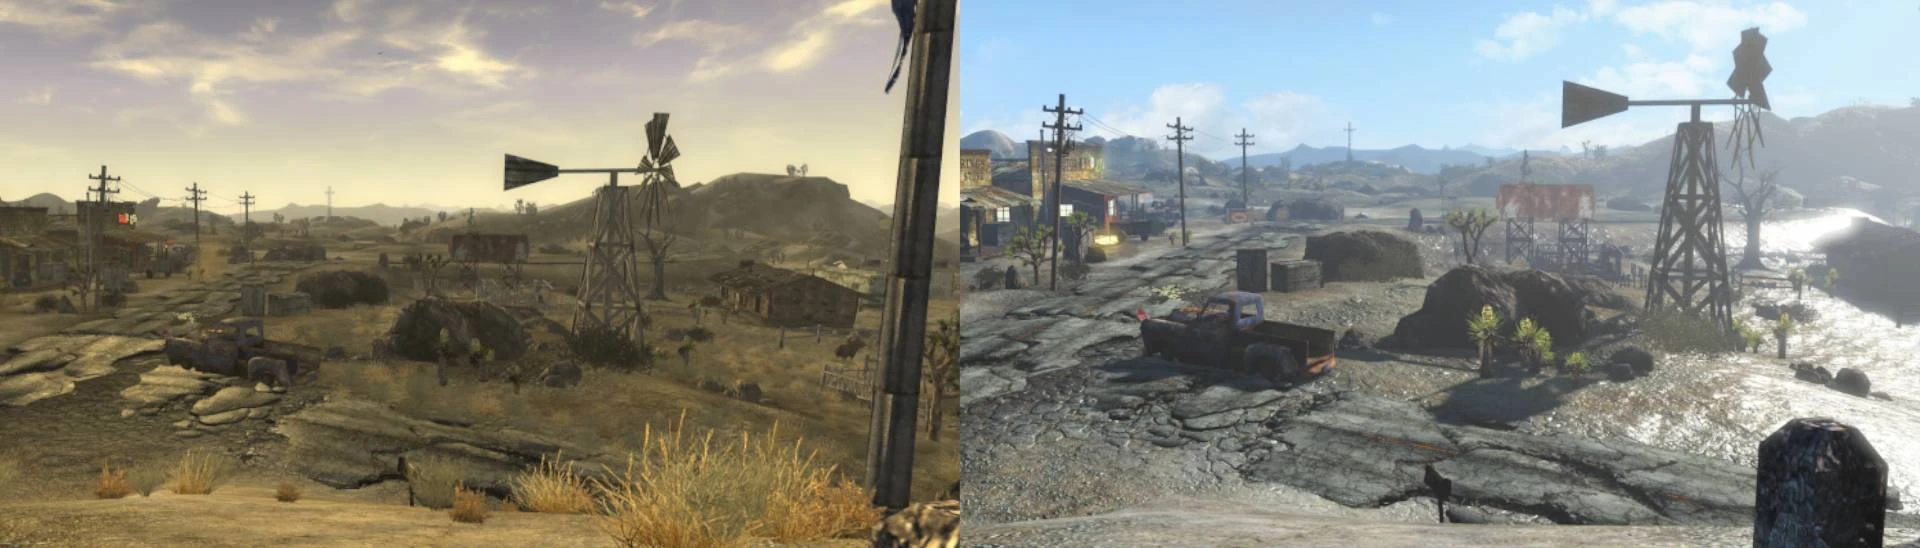 Modding Fallout New Vegas: Downloading & Installing Nexus Mod